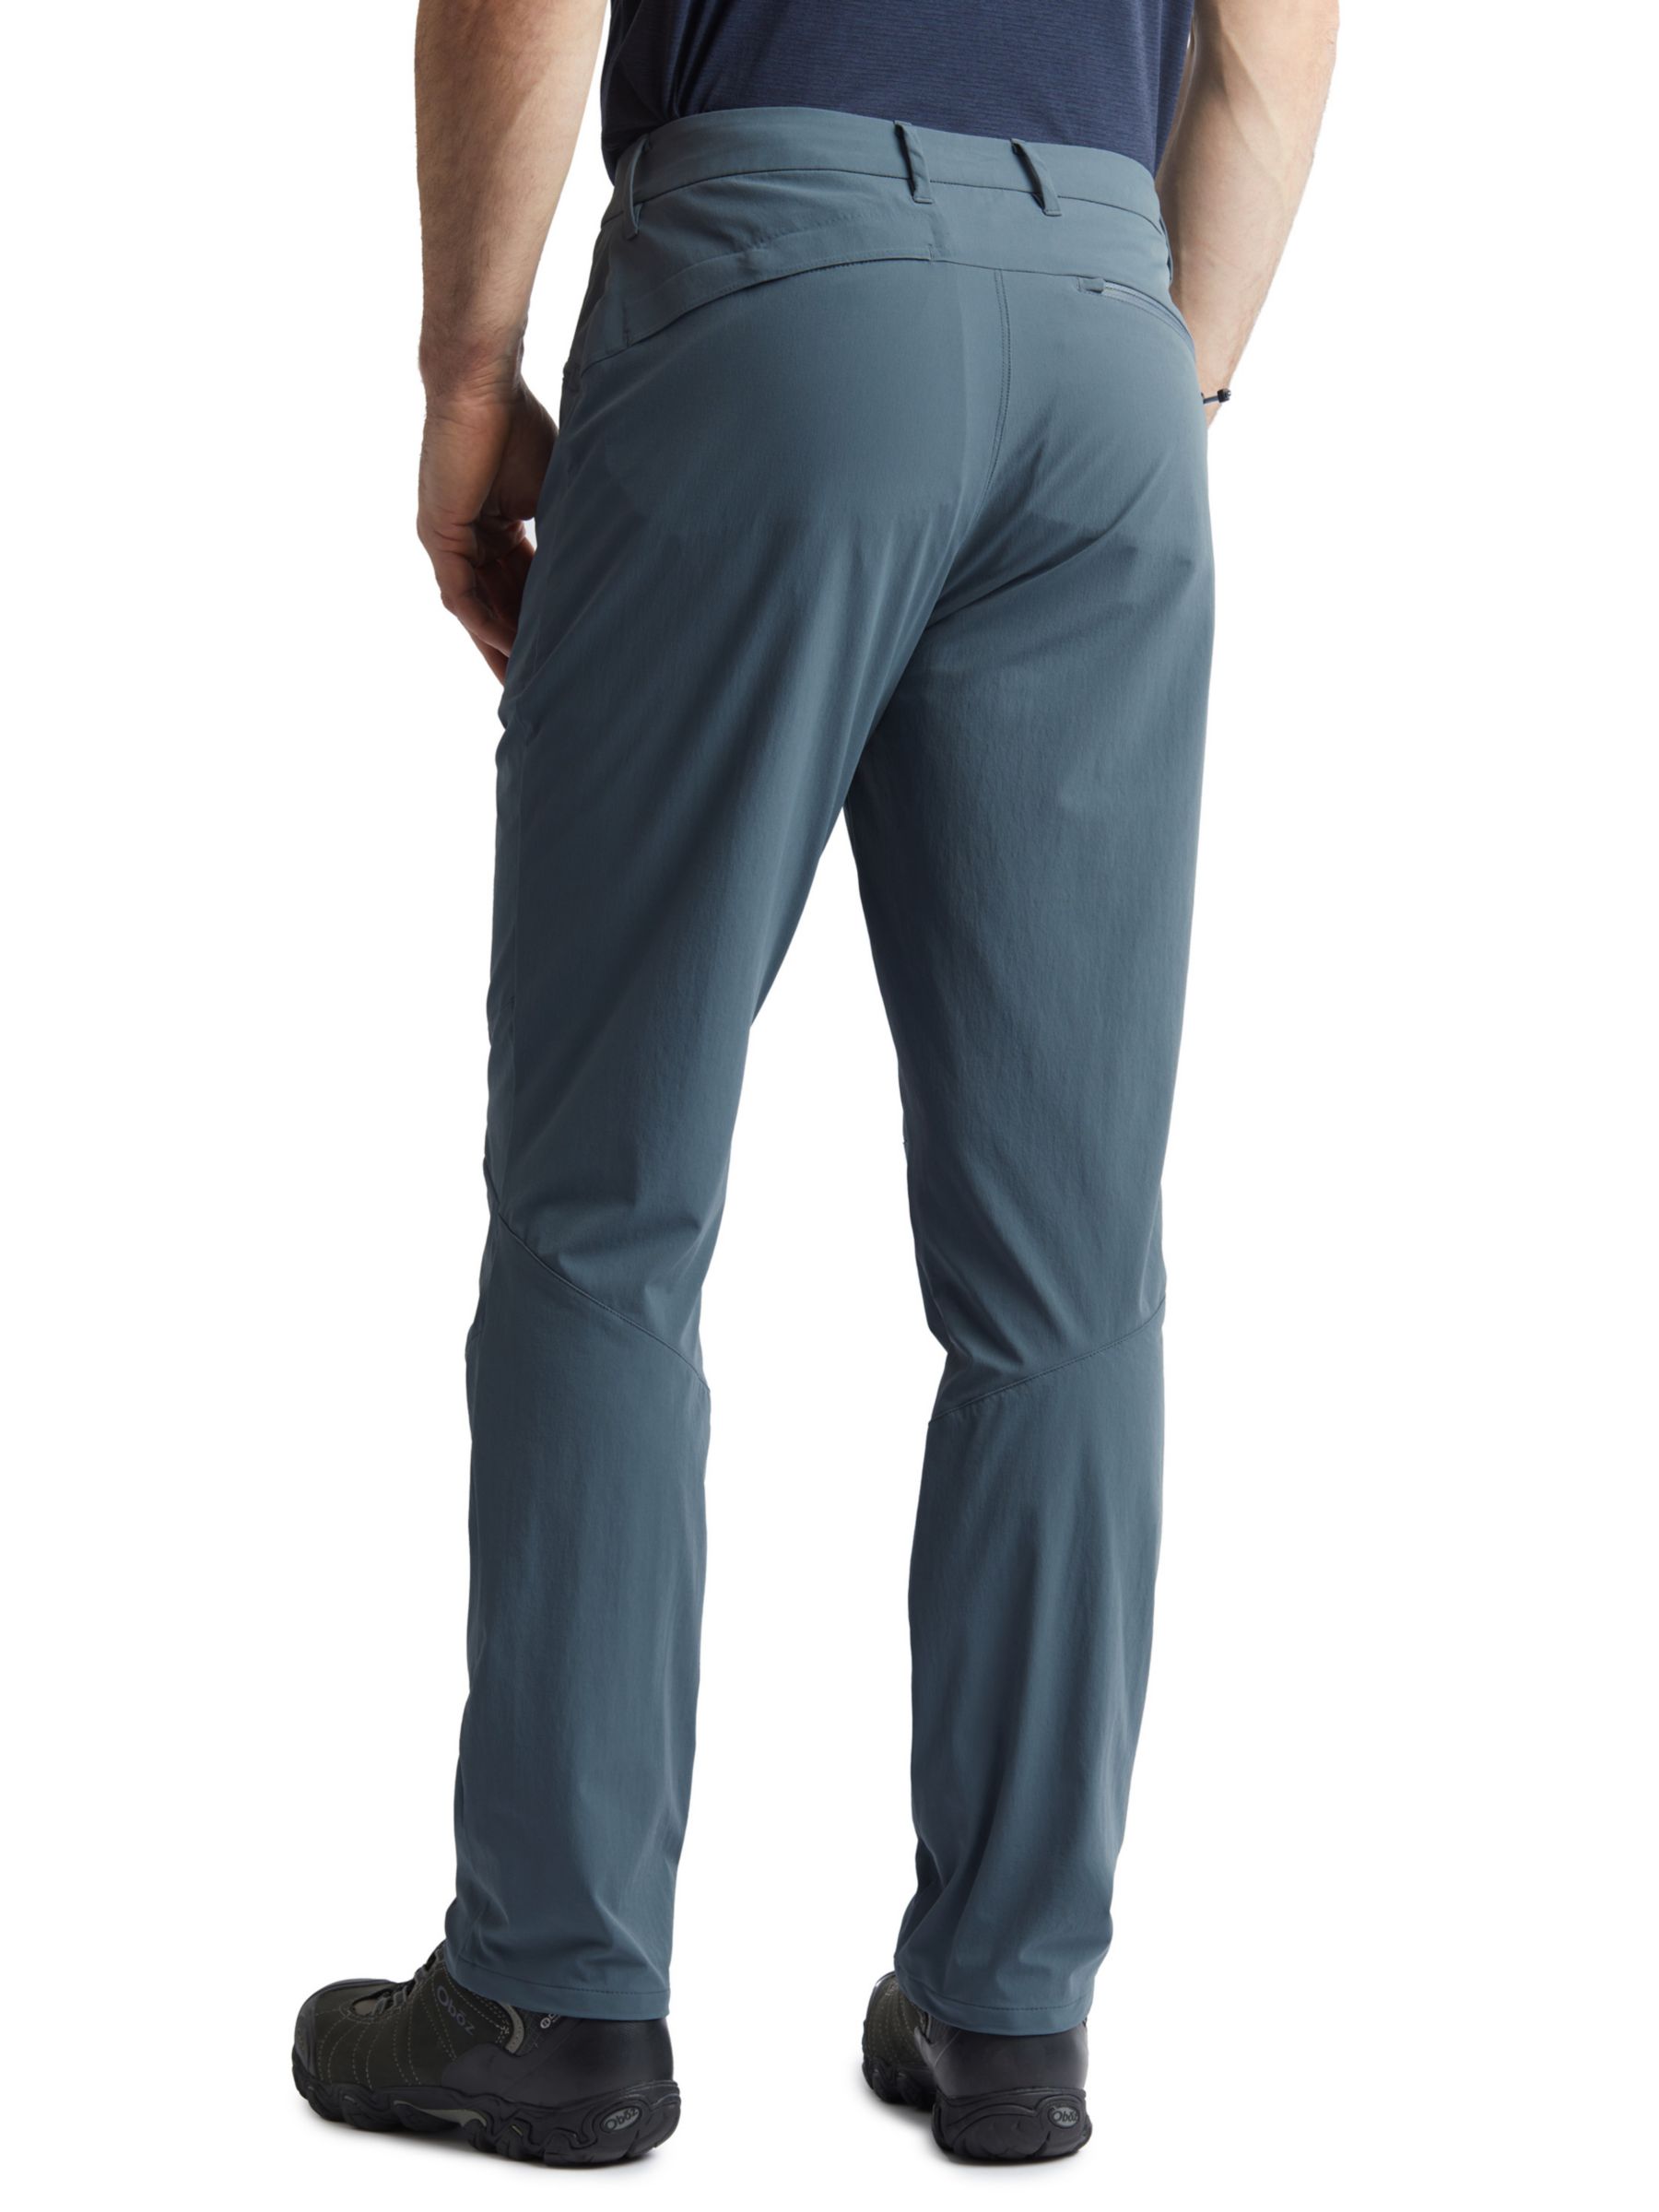 Buy Rohan Vista Lightweight Walking Trousers Online at johnlewis.com